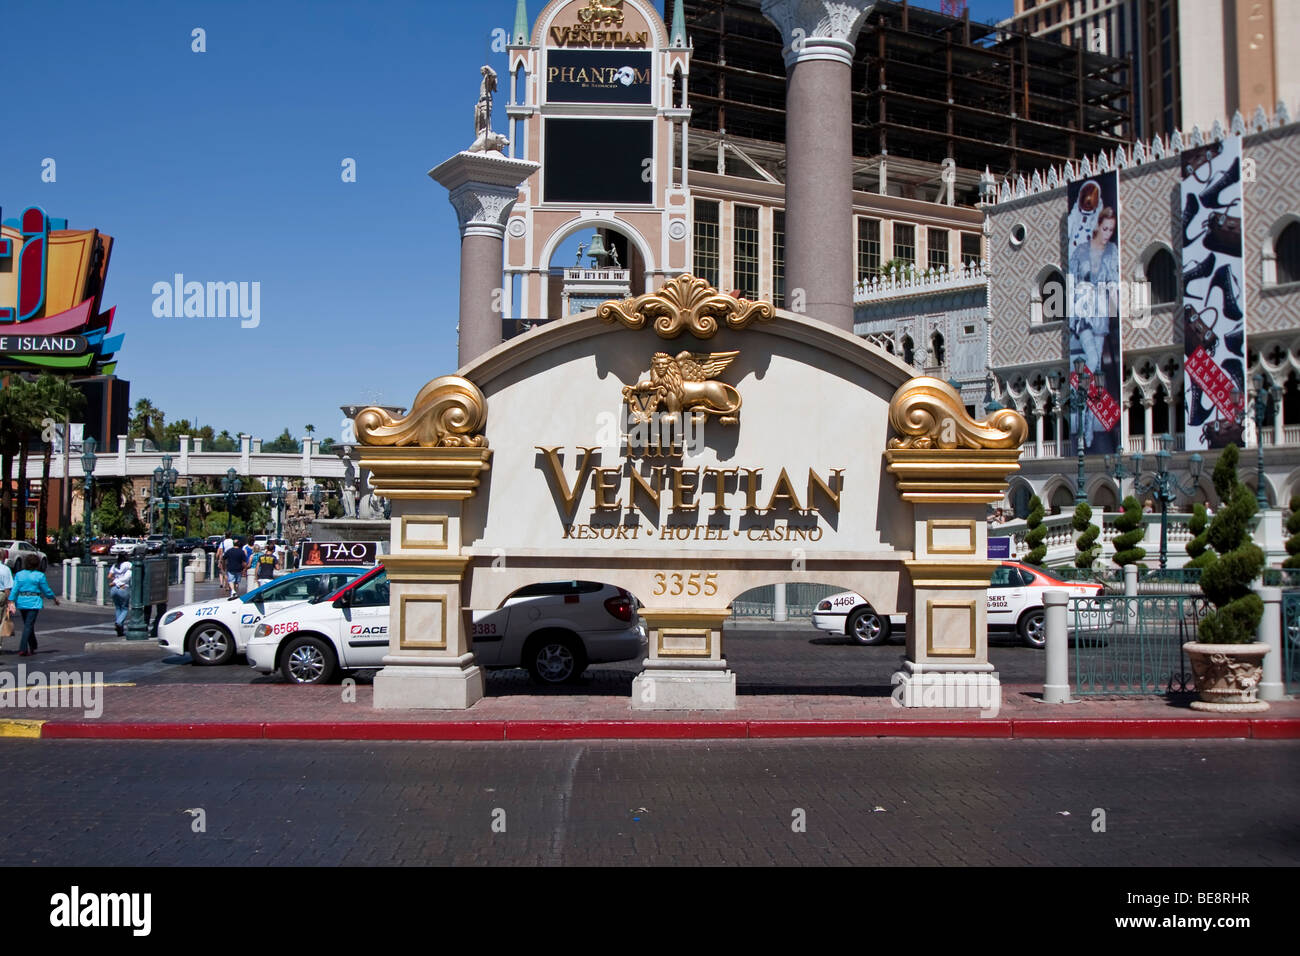 The Venetian Hotel in Las Vegas, Nevada, USA Stock Photo